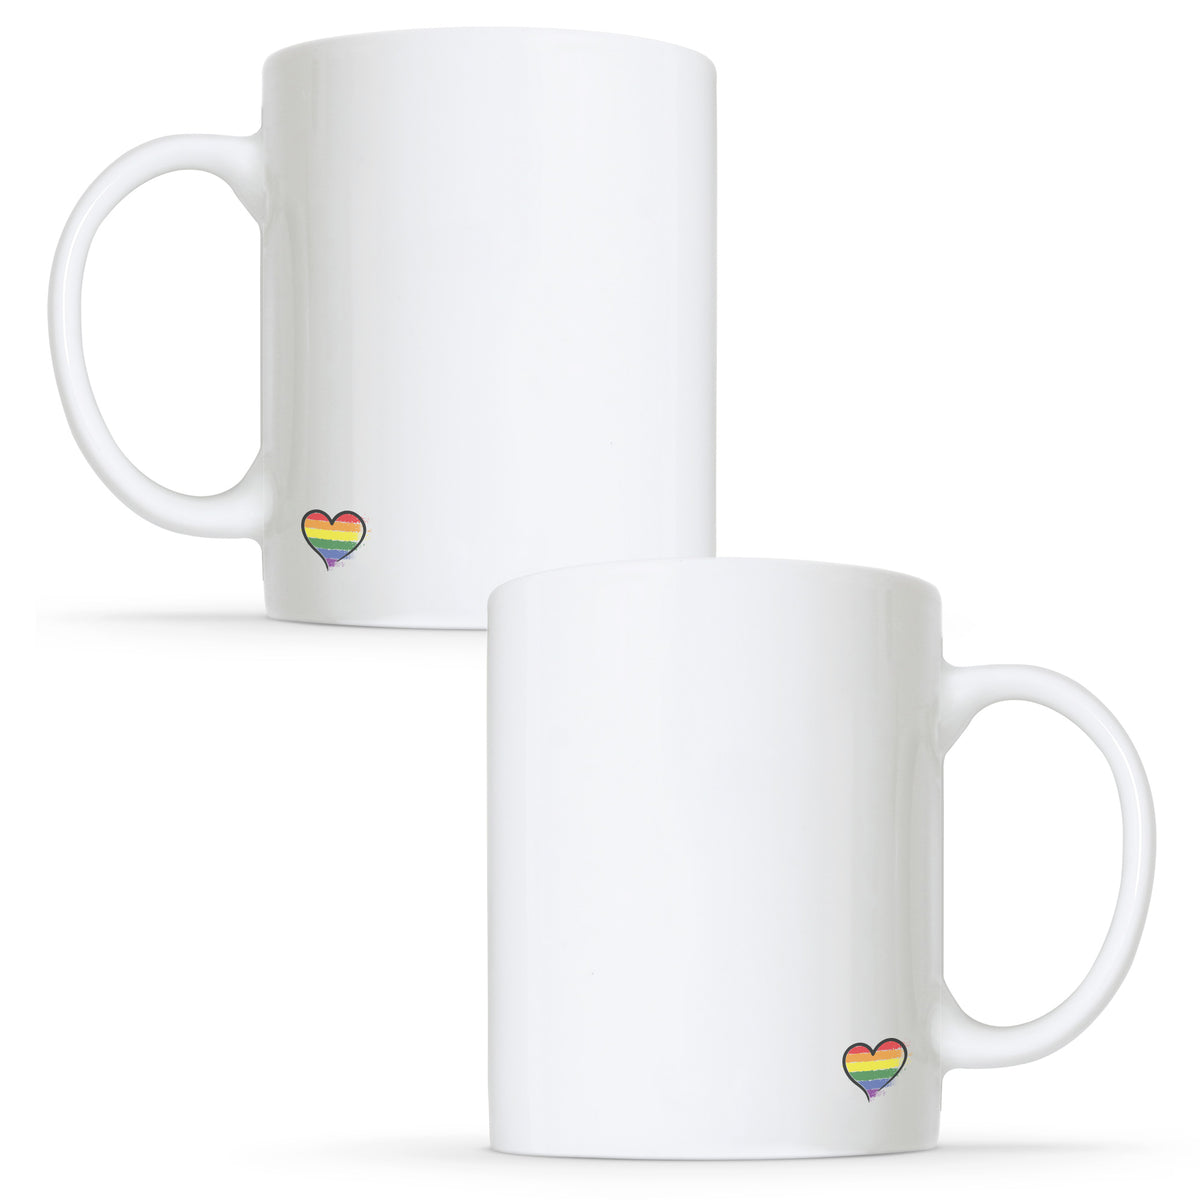 I Met you, I Loved you - Lesbian Gay Couple Mug Set | Gift